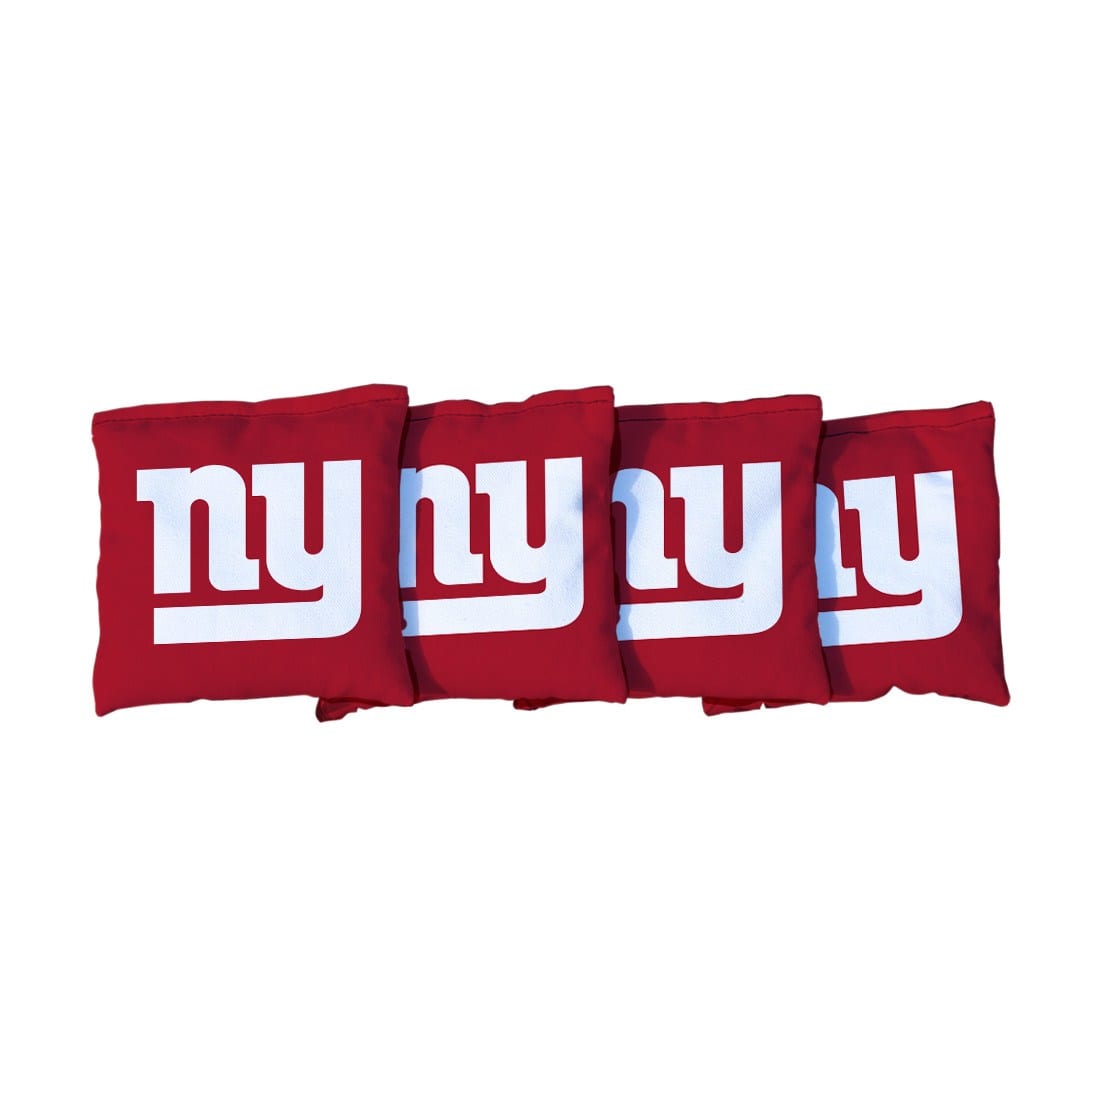 New York Giants NFL Red Cornhole Bags